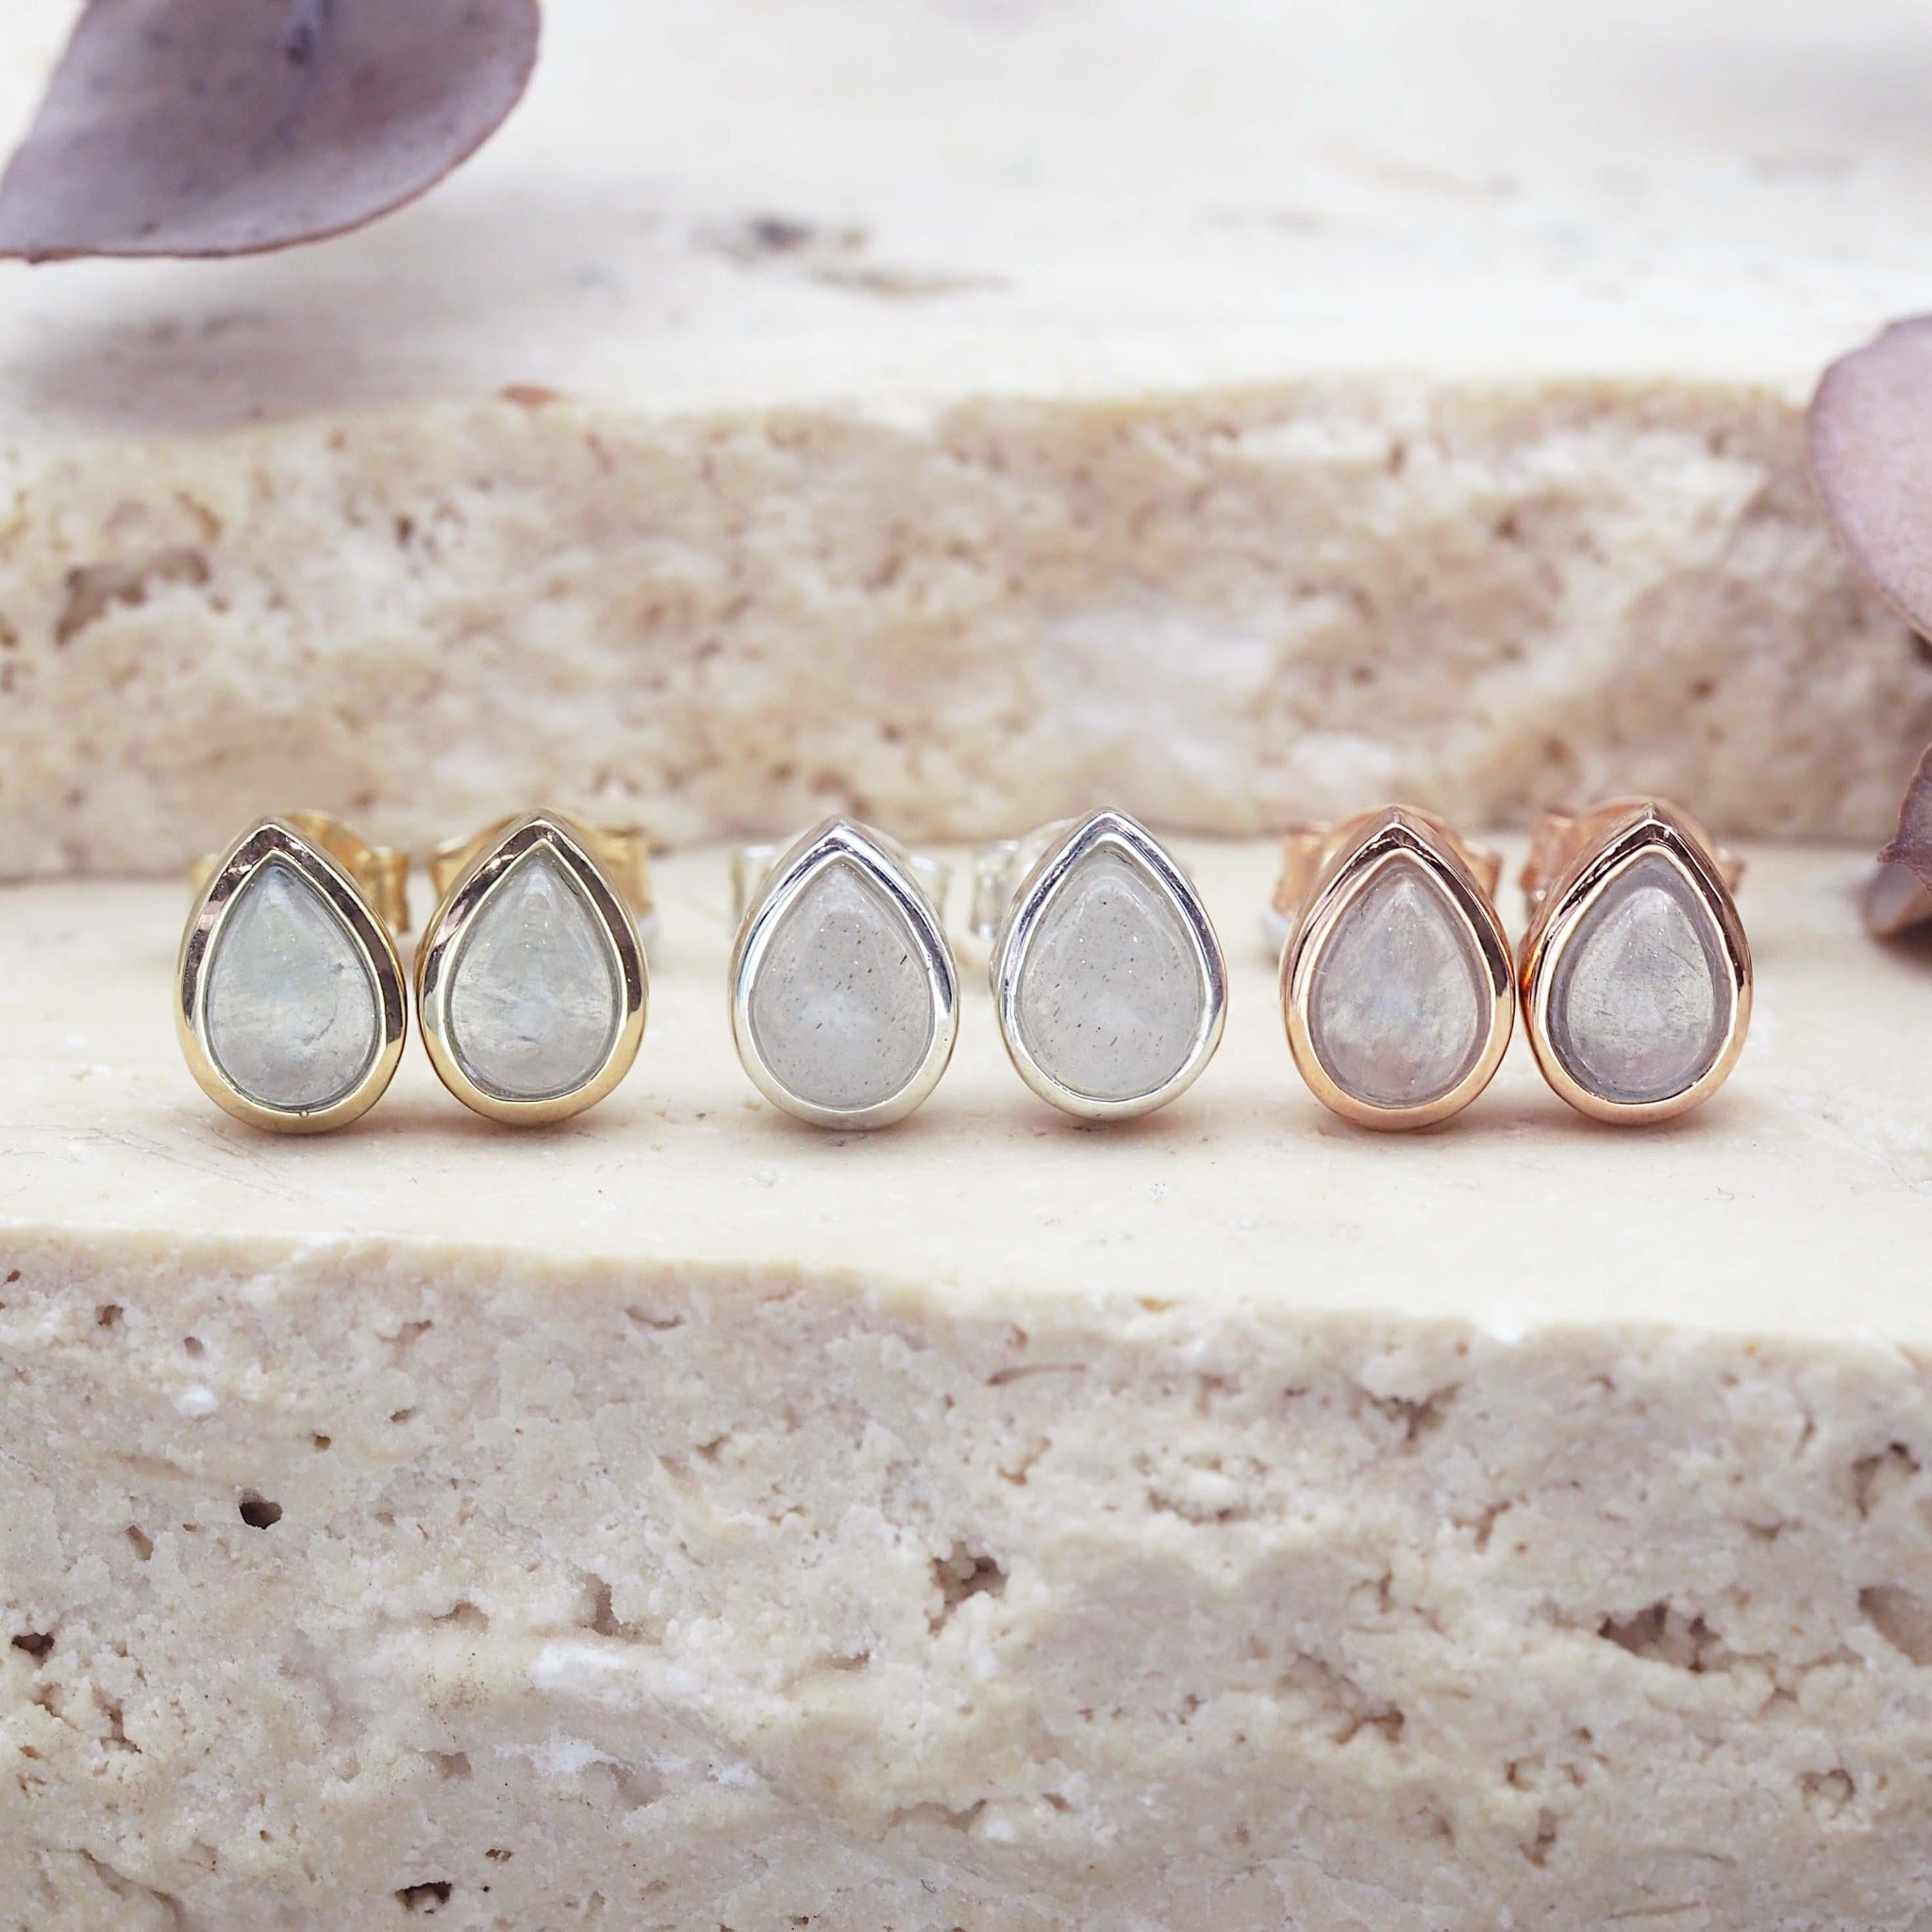 March Birthstone Earrings - Aquamarine - womens jewellery by indie and harper